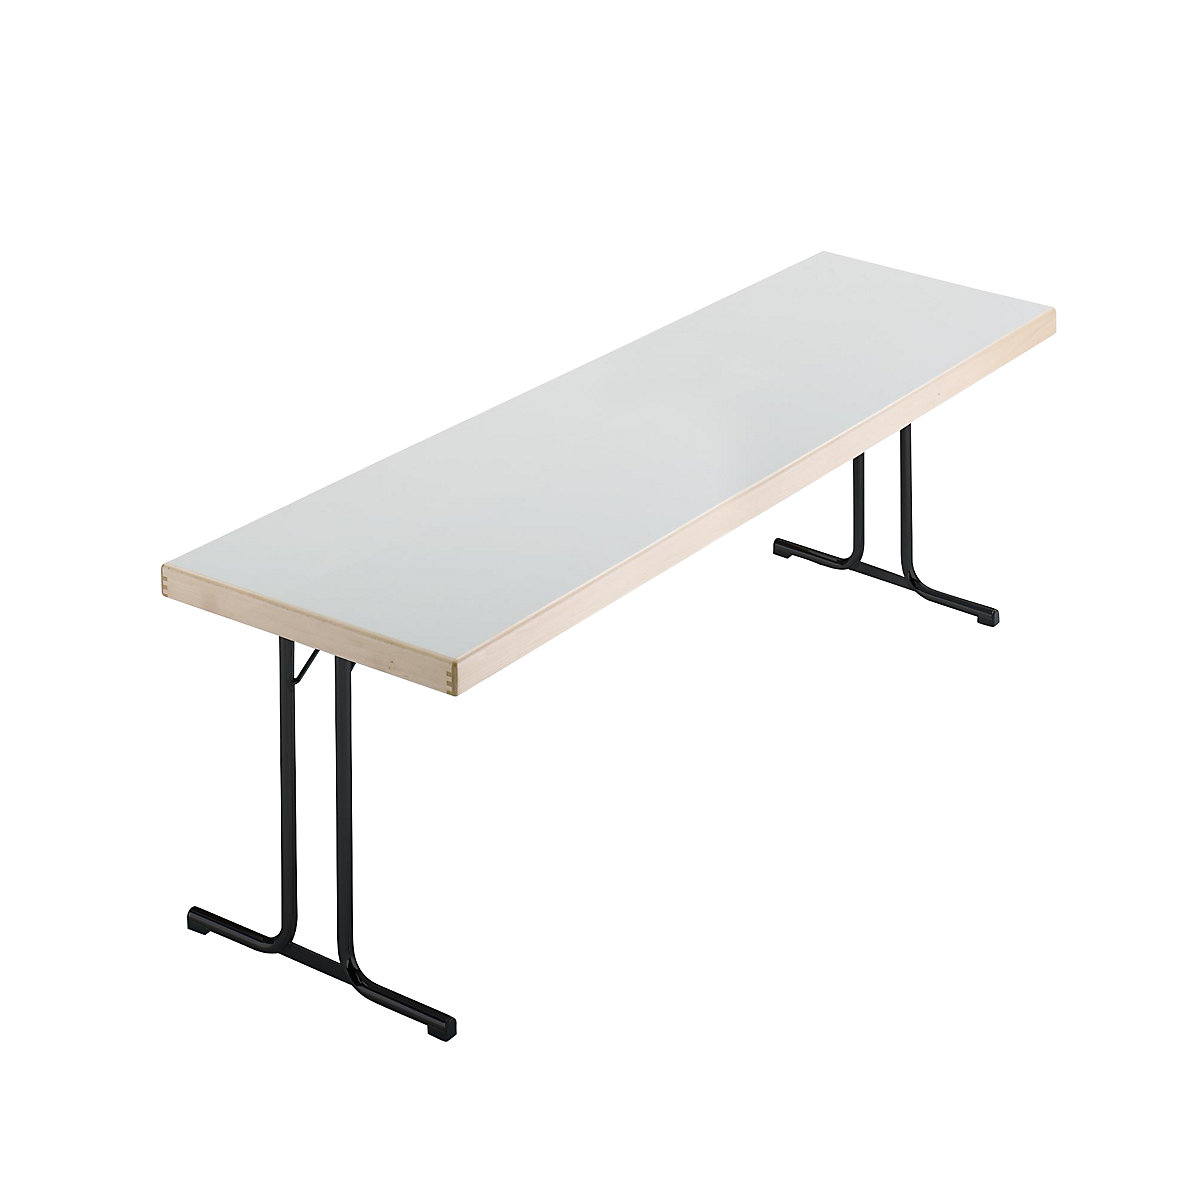 Sklápací stôl, podstavec s dvojitými nohami tvaru T, 1700 x 700 mm, podstavec antracitová, doska svetlošedá-13